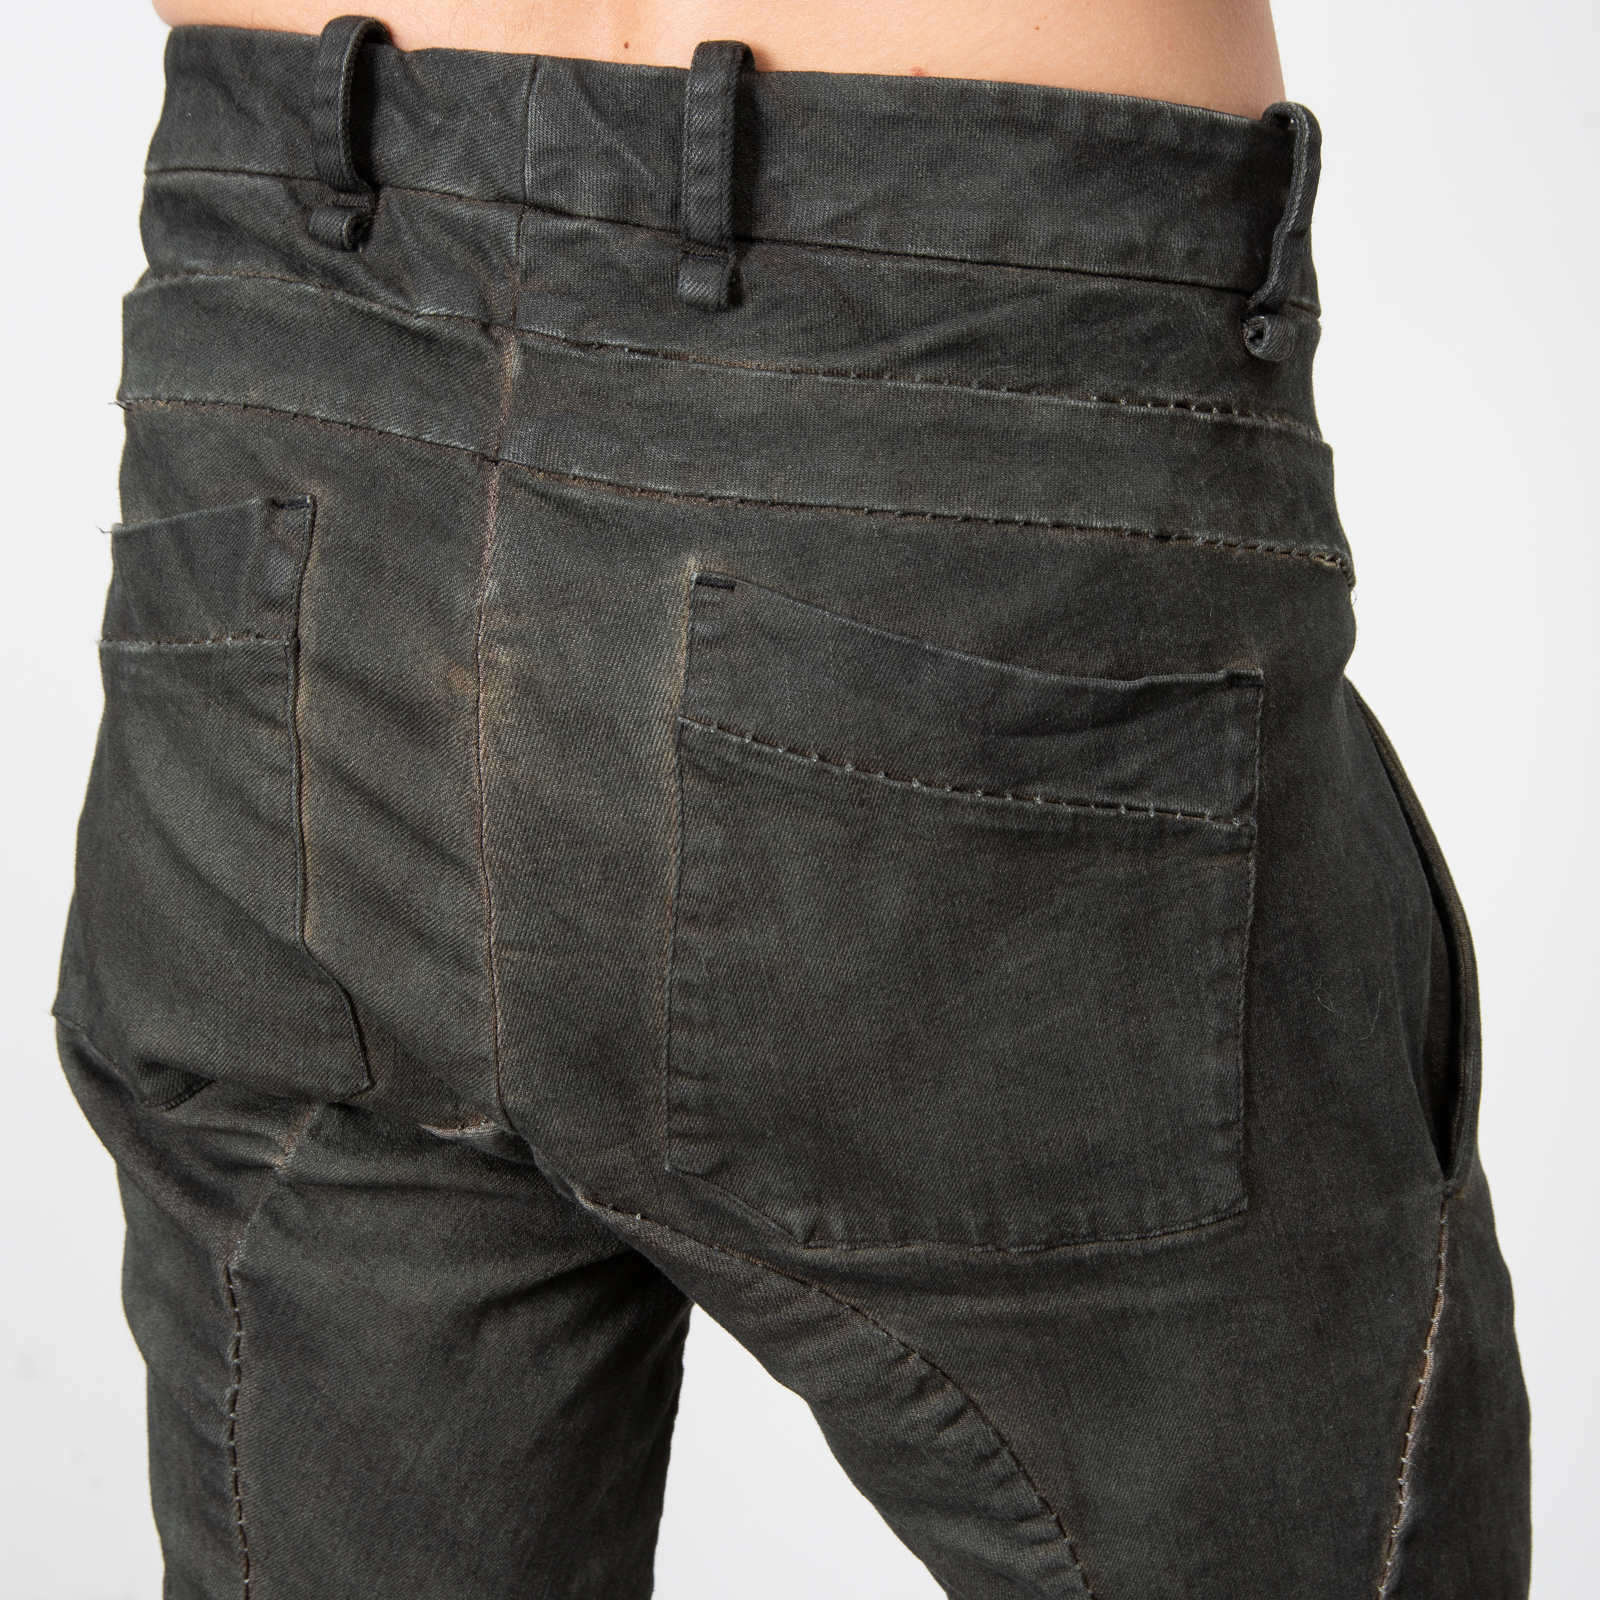 Leon Baggy Trousers | MEAN BLVD | Pants design, Baggy trousers, S models